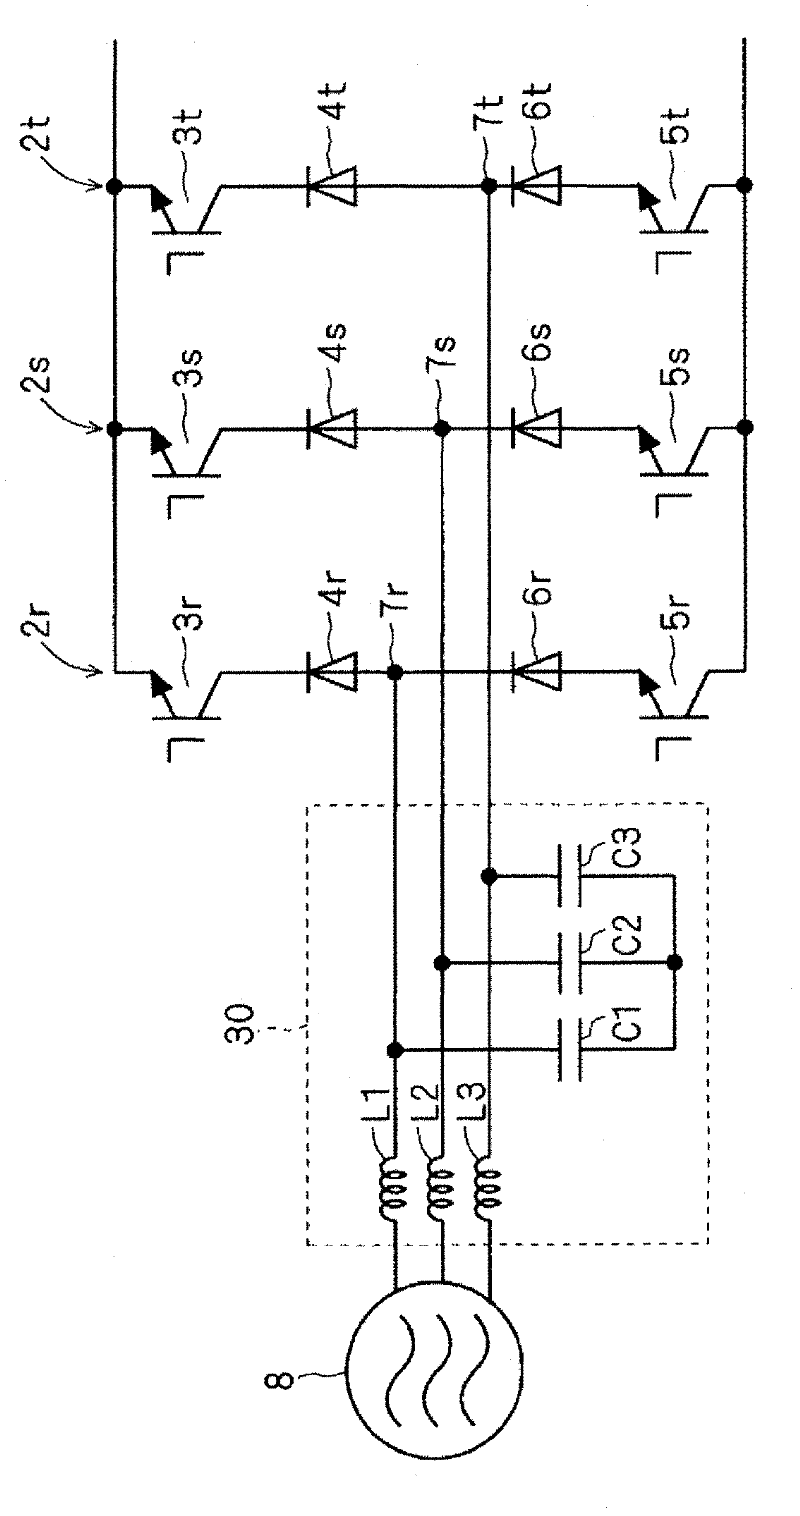 Current source power conversion circuit